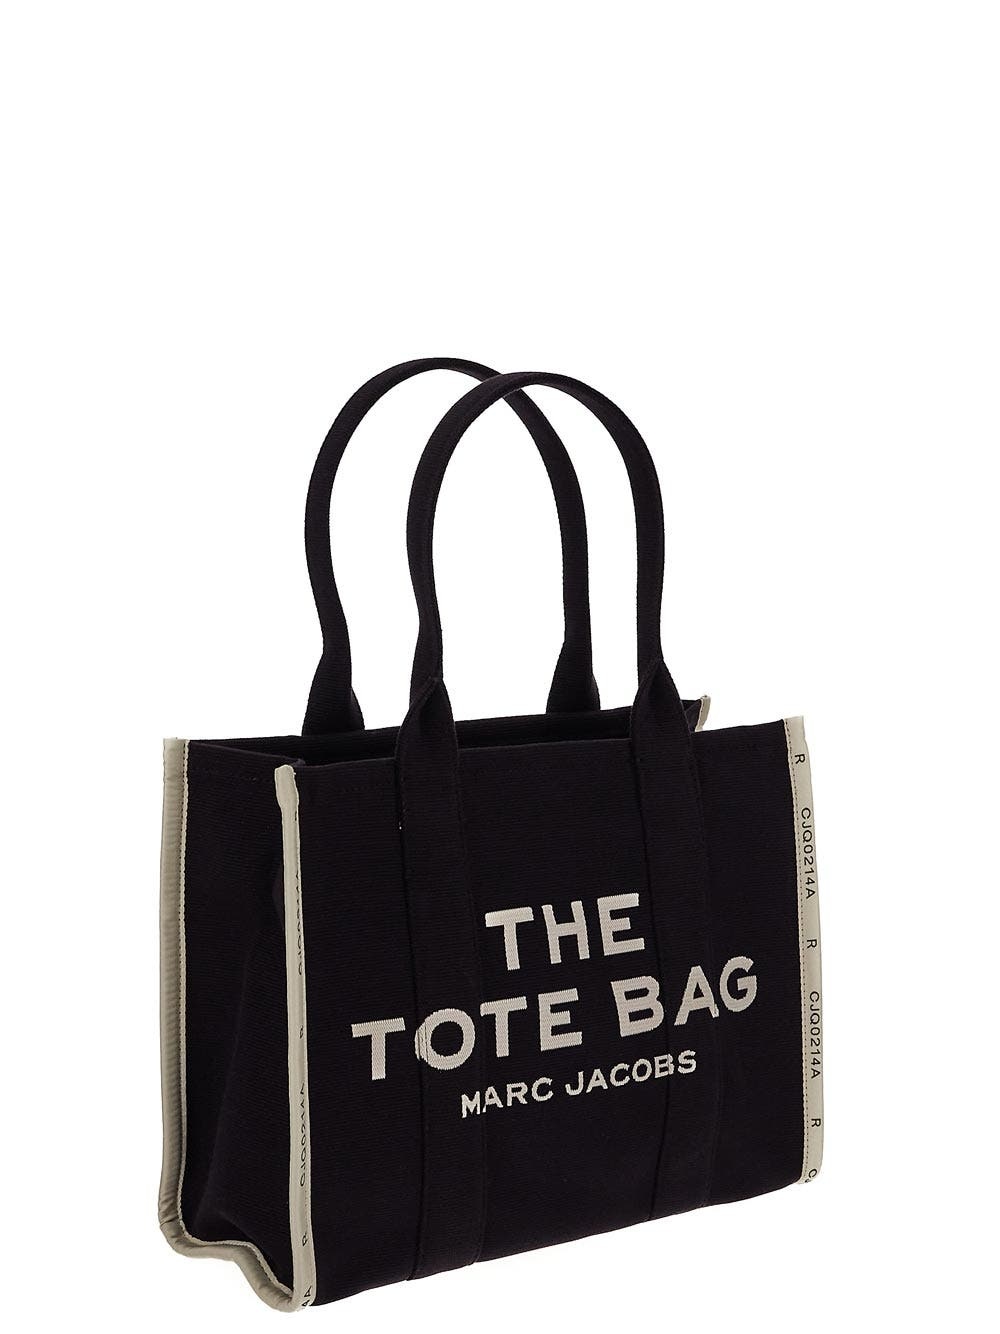 The Tote Bag - 2